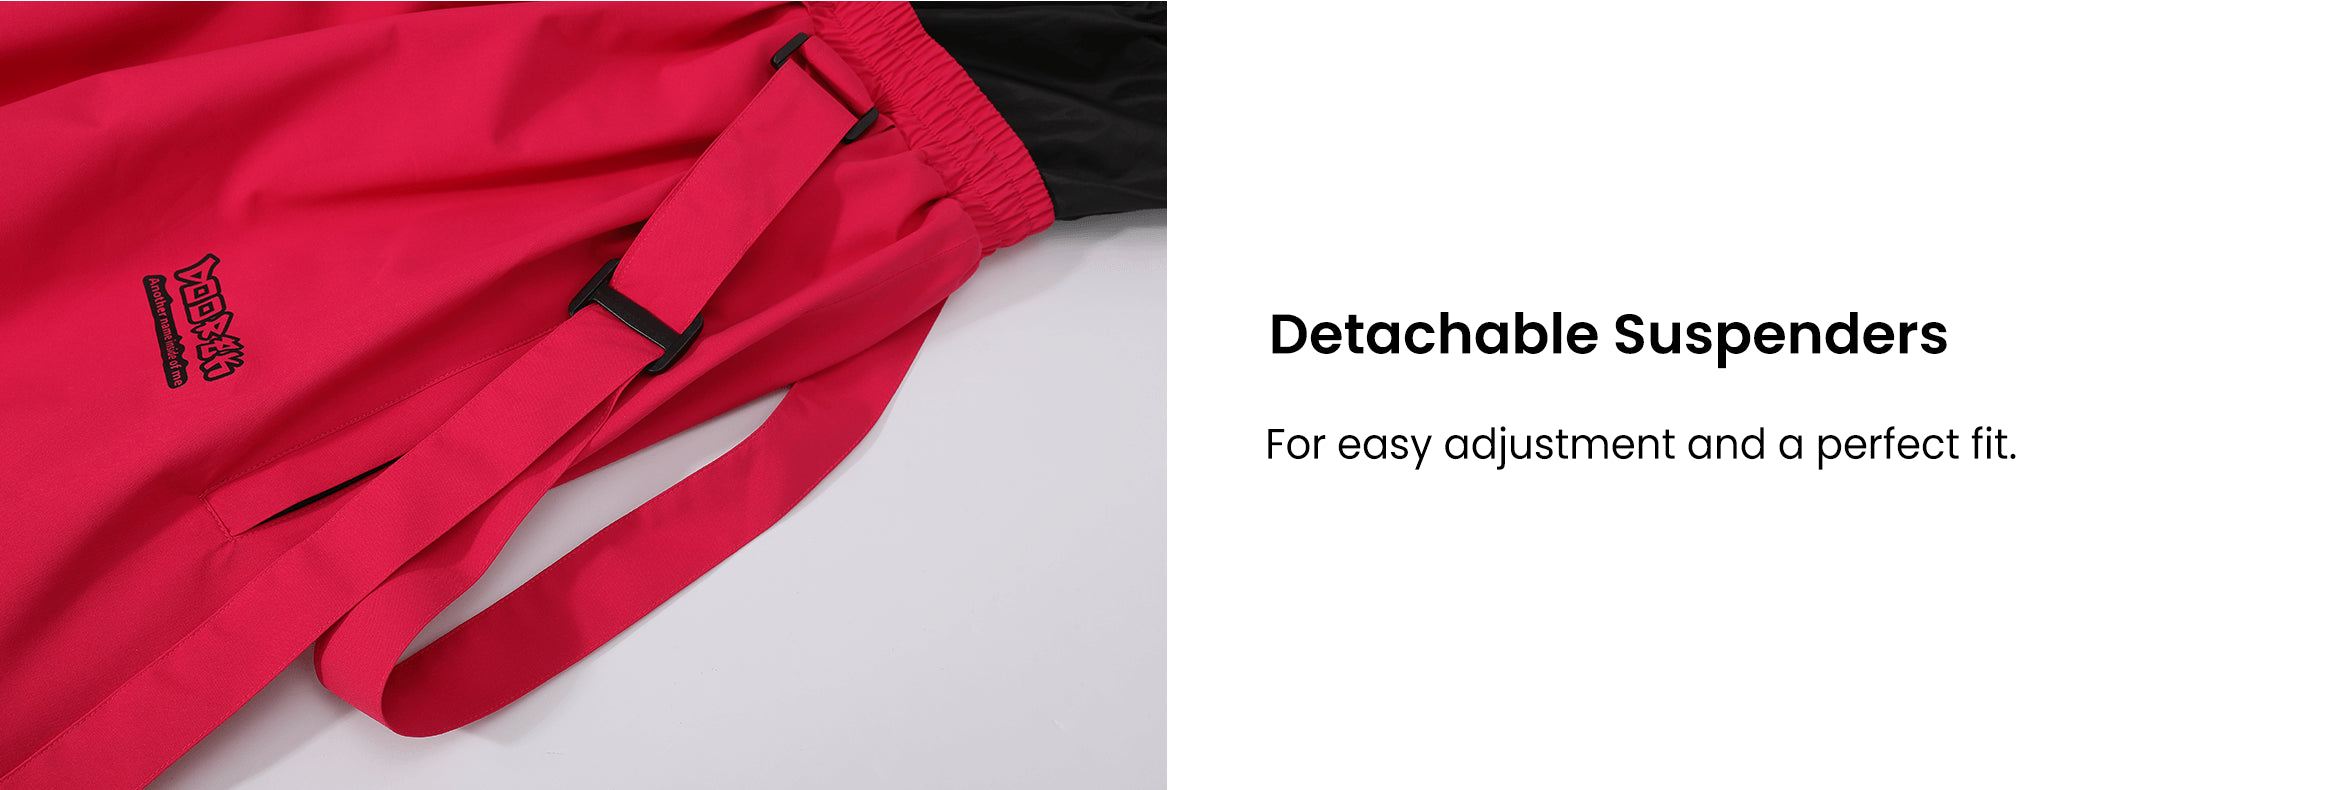 7. Doorek ski pants - Detachable Suspenders